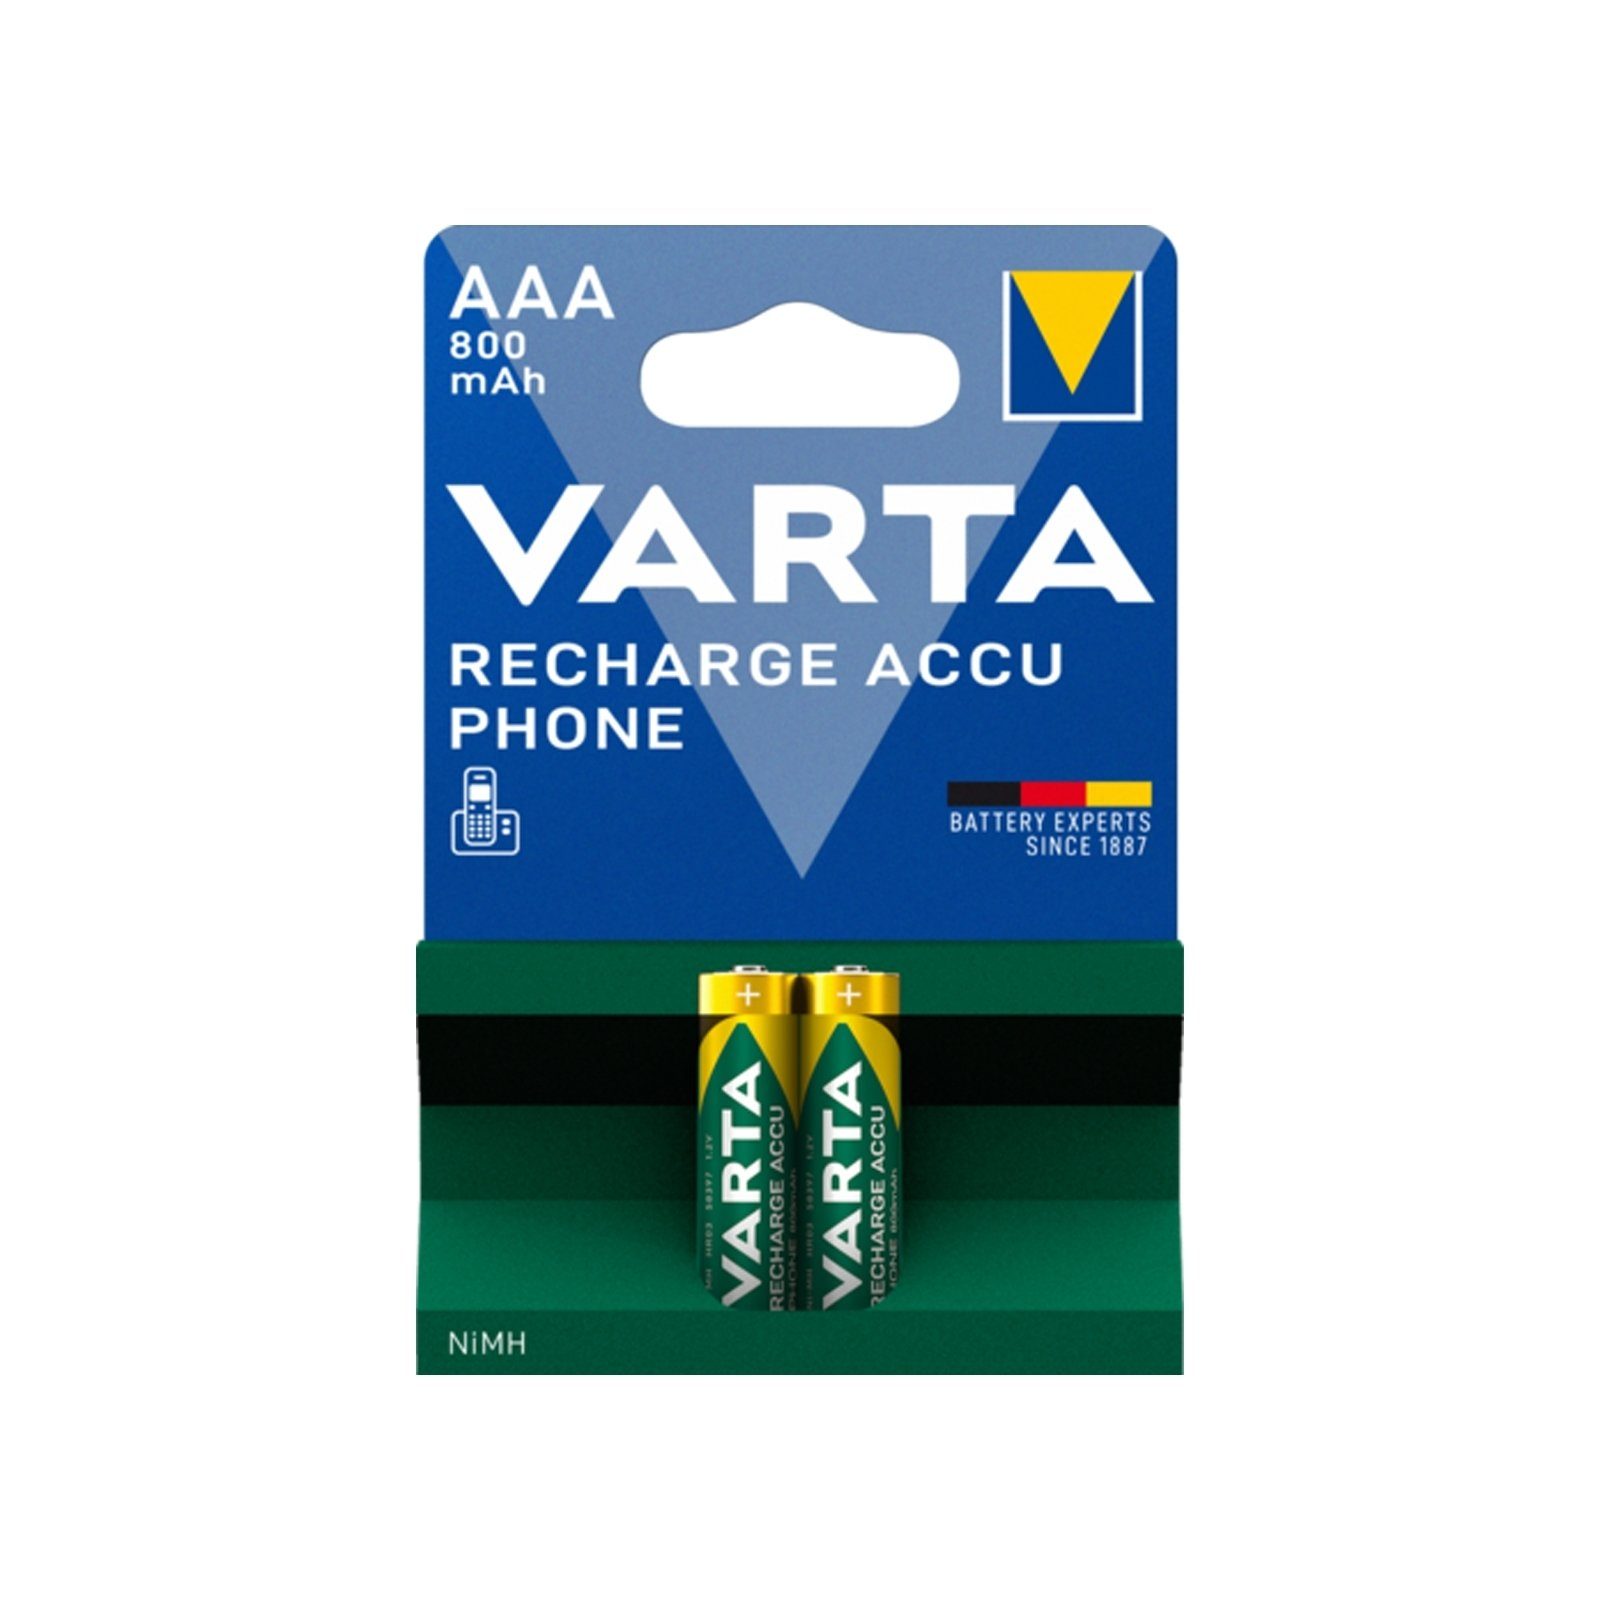 Batterie Accu 2xAAA Recharge mAh VARTA 800 Phone